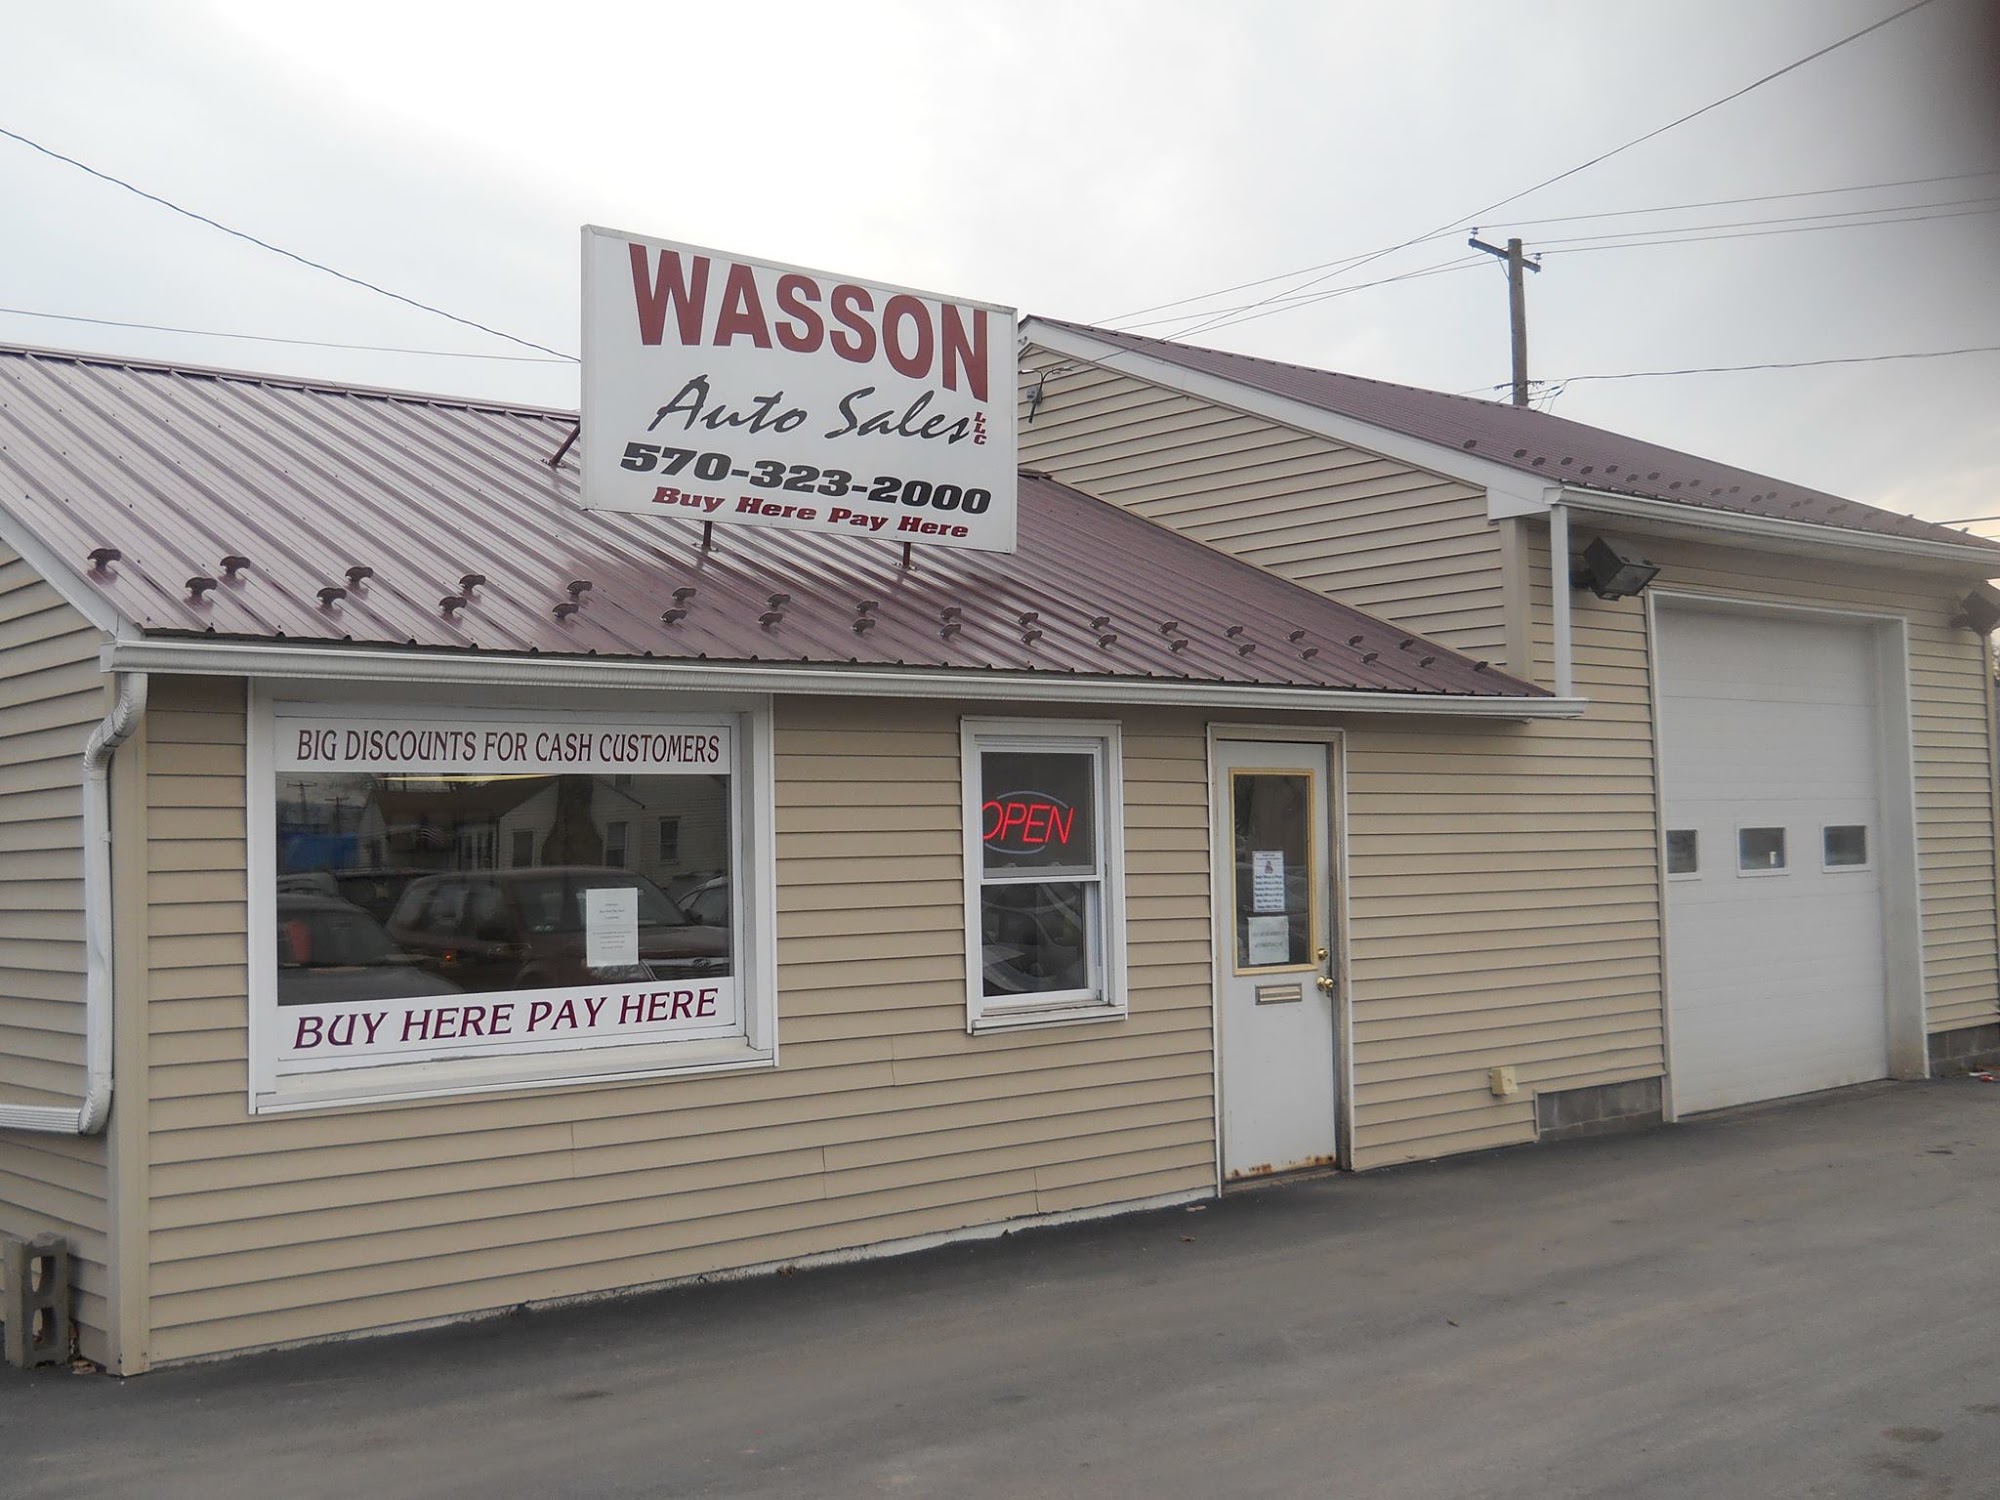 Wasson Auto Sales LLC